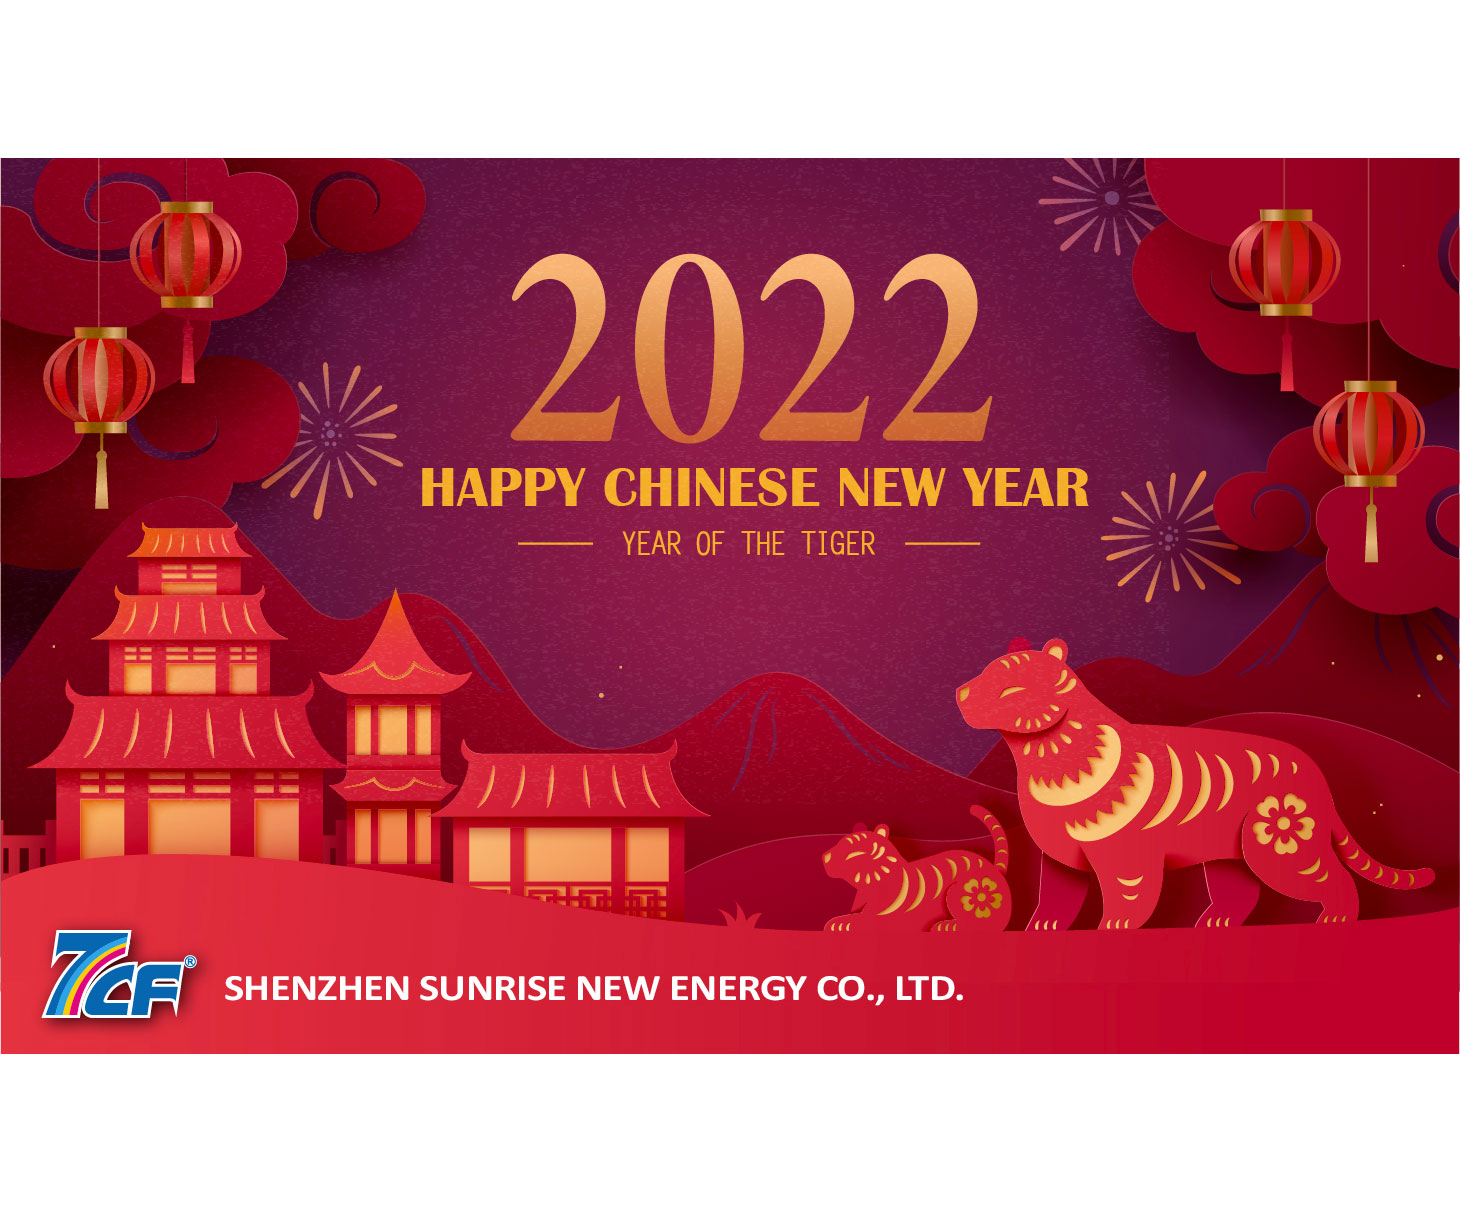 Shenzhen Sunrise New Energy Co.,Ltd. Adresse du nouvel an 2022